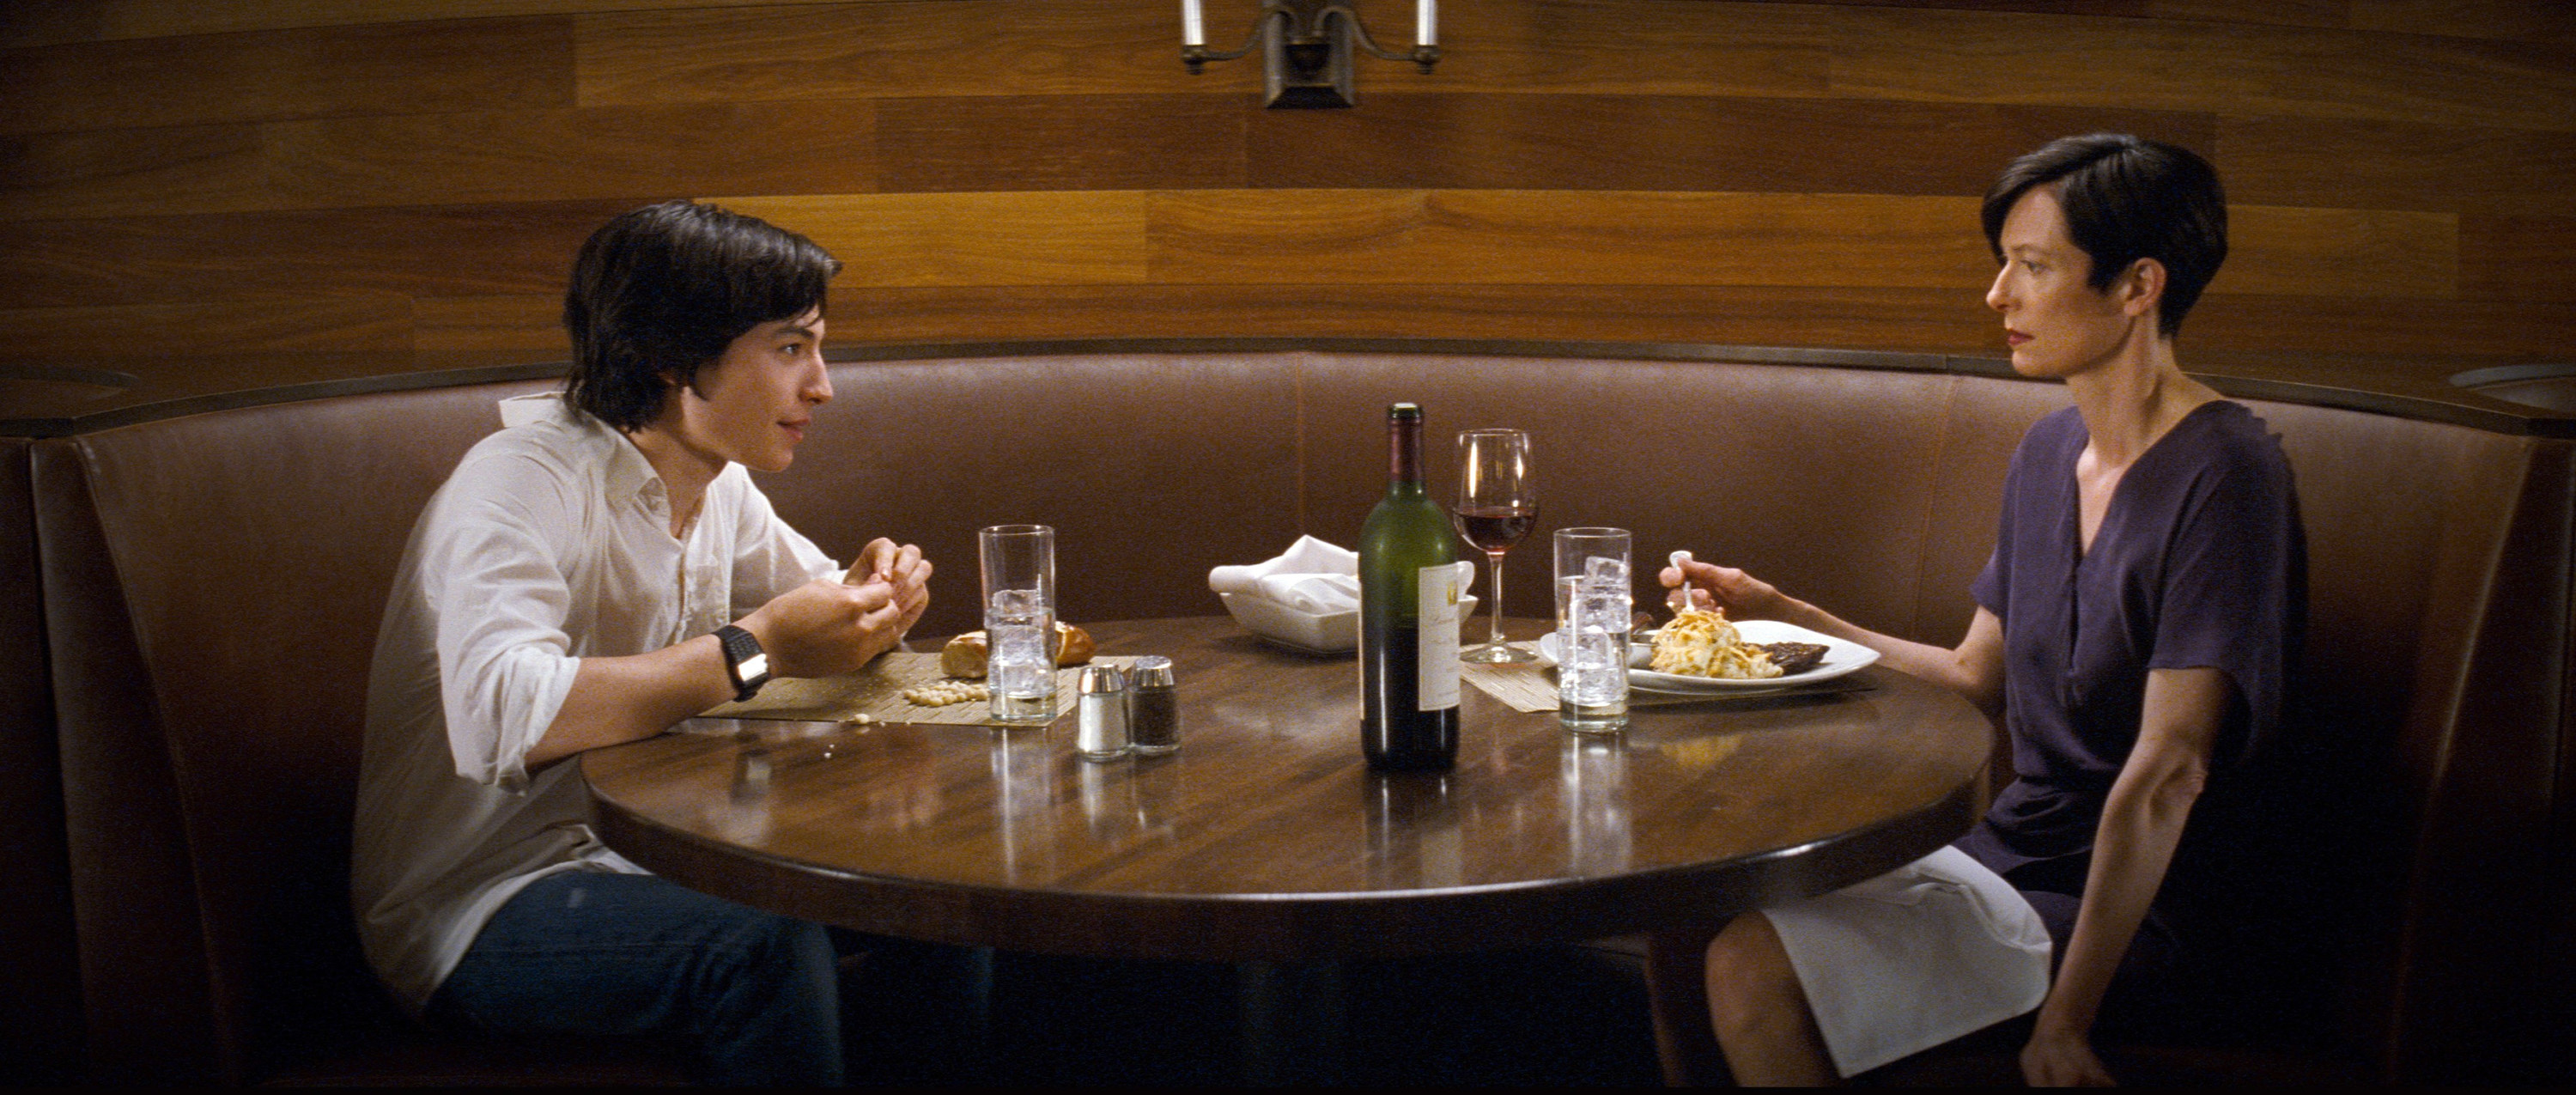 Ezra Miller and Tilda Swinton sit across a table